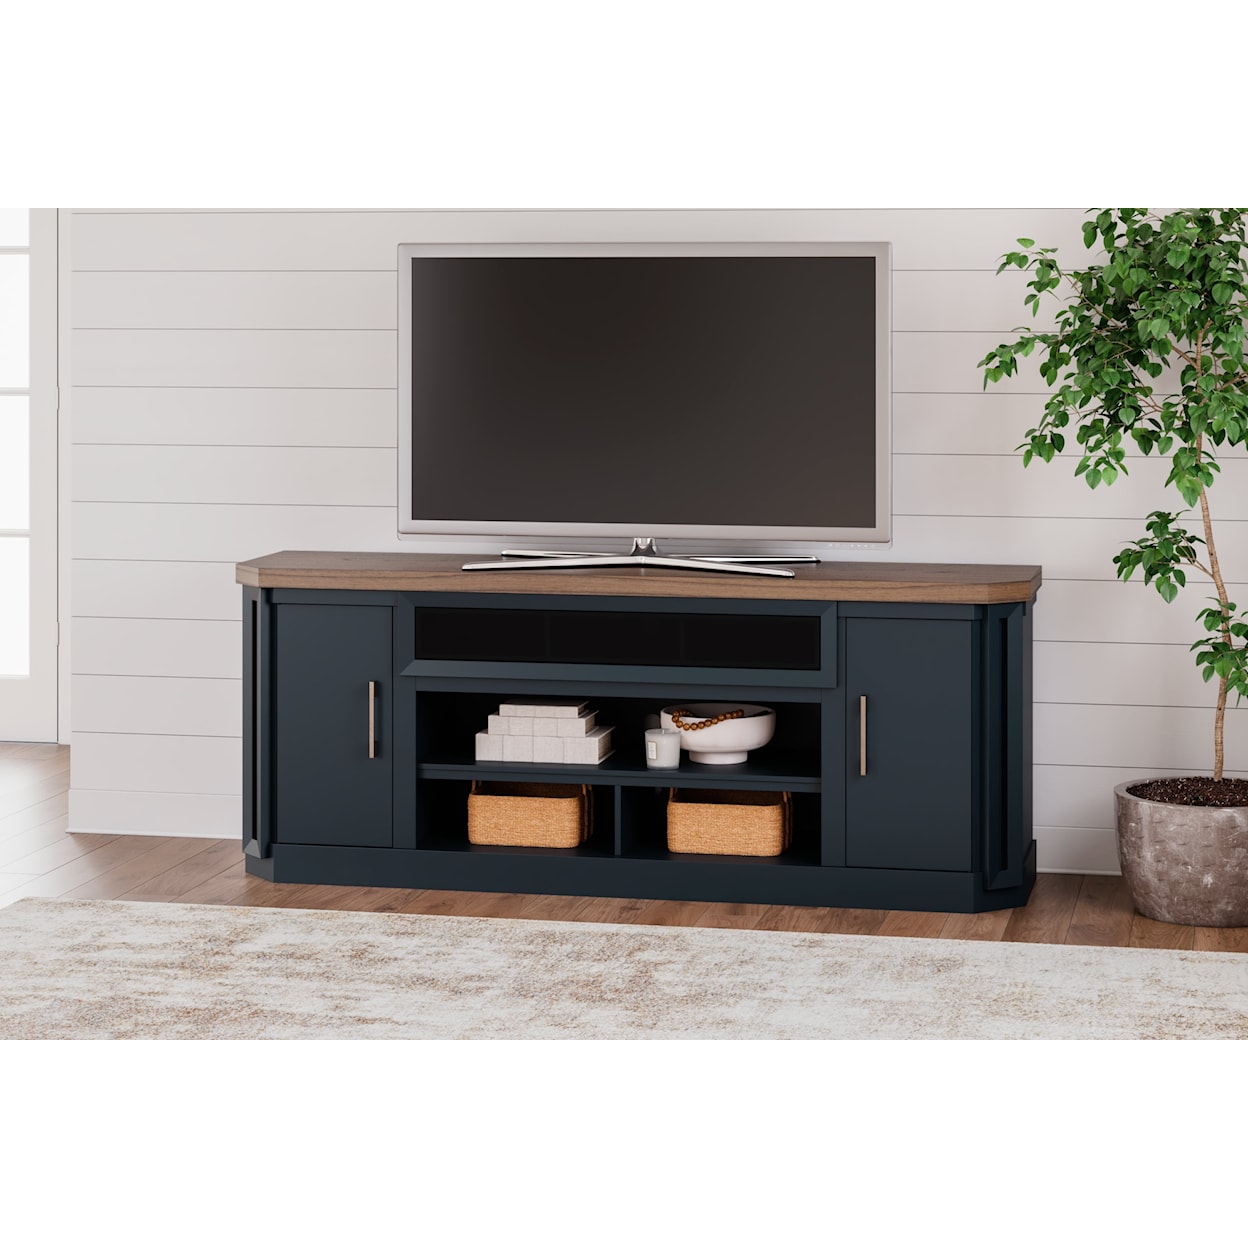 Signature Landocken XL TV Stand w/Fireplace Option